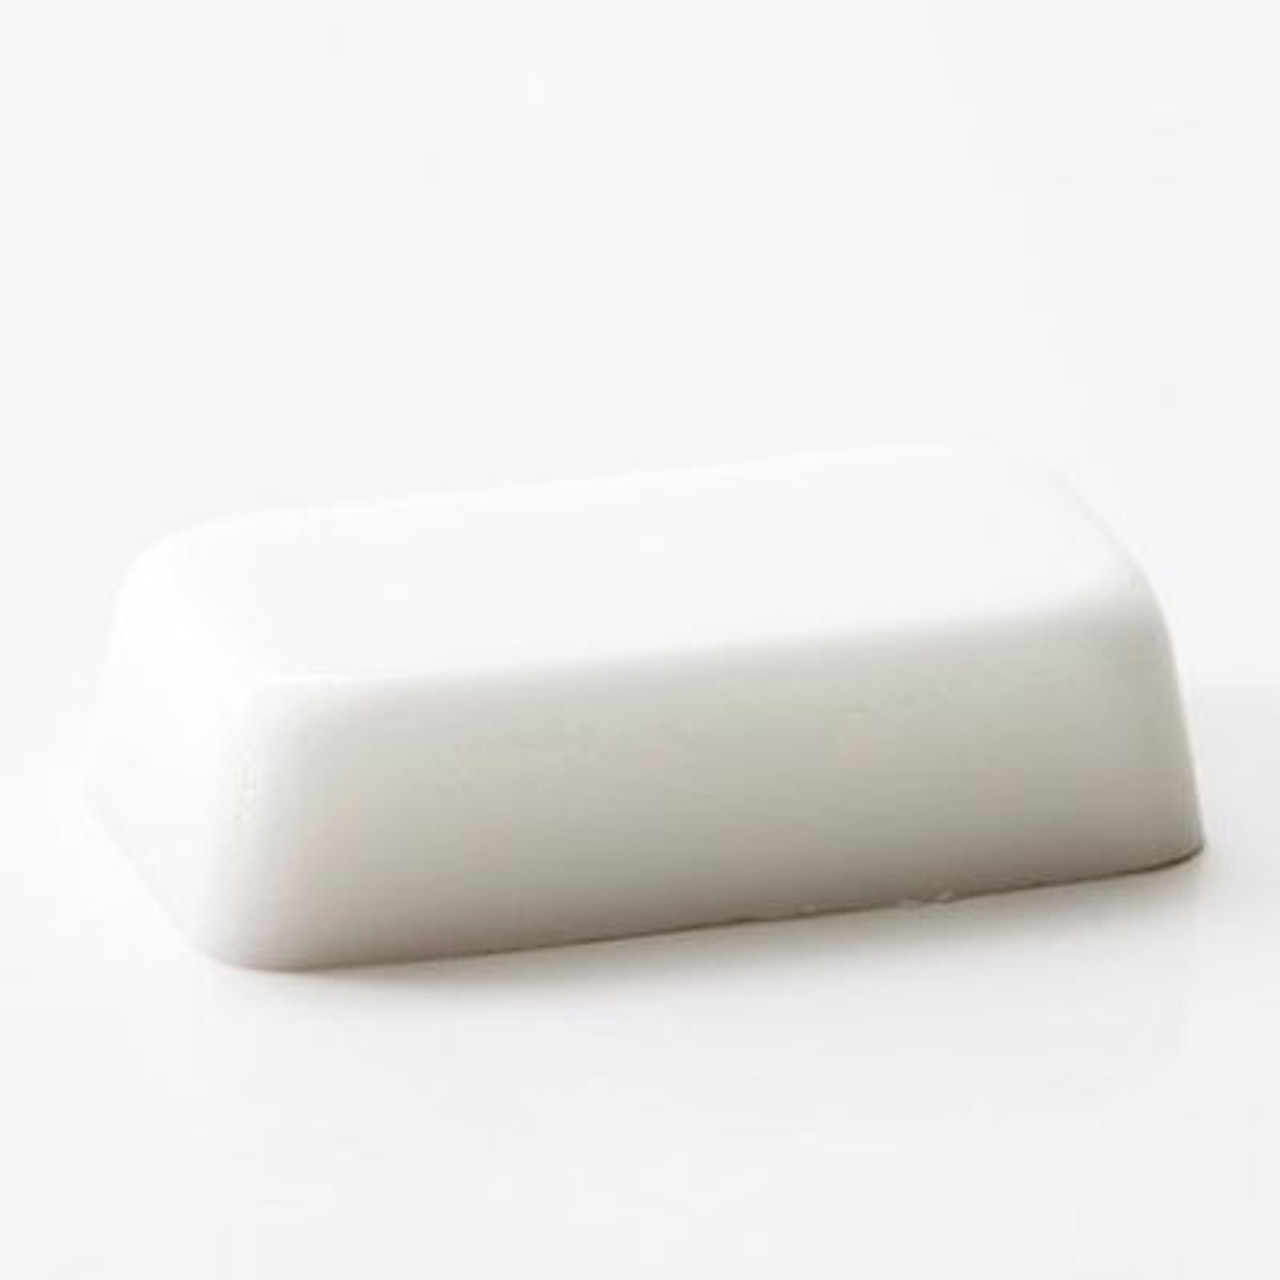 bMAKER All-Natural Shea Butter Melt and Pour Soap Base (2lb Blocks